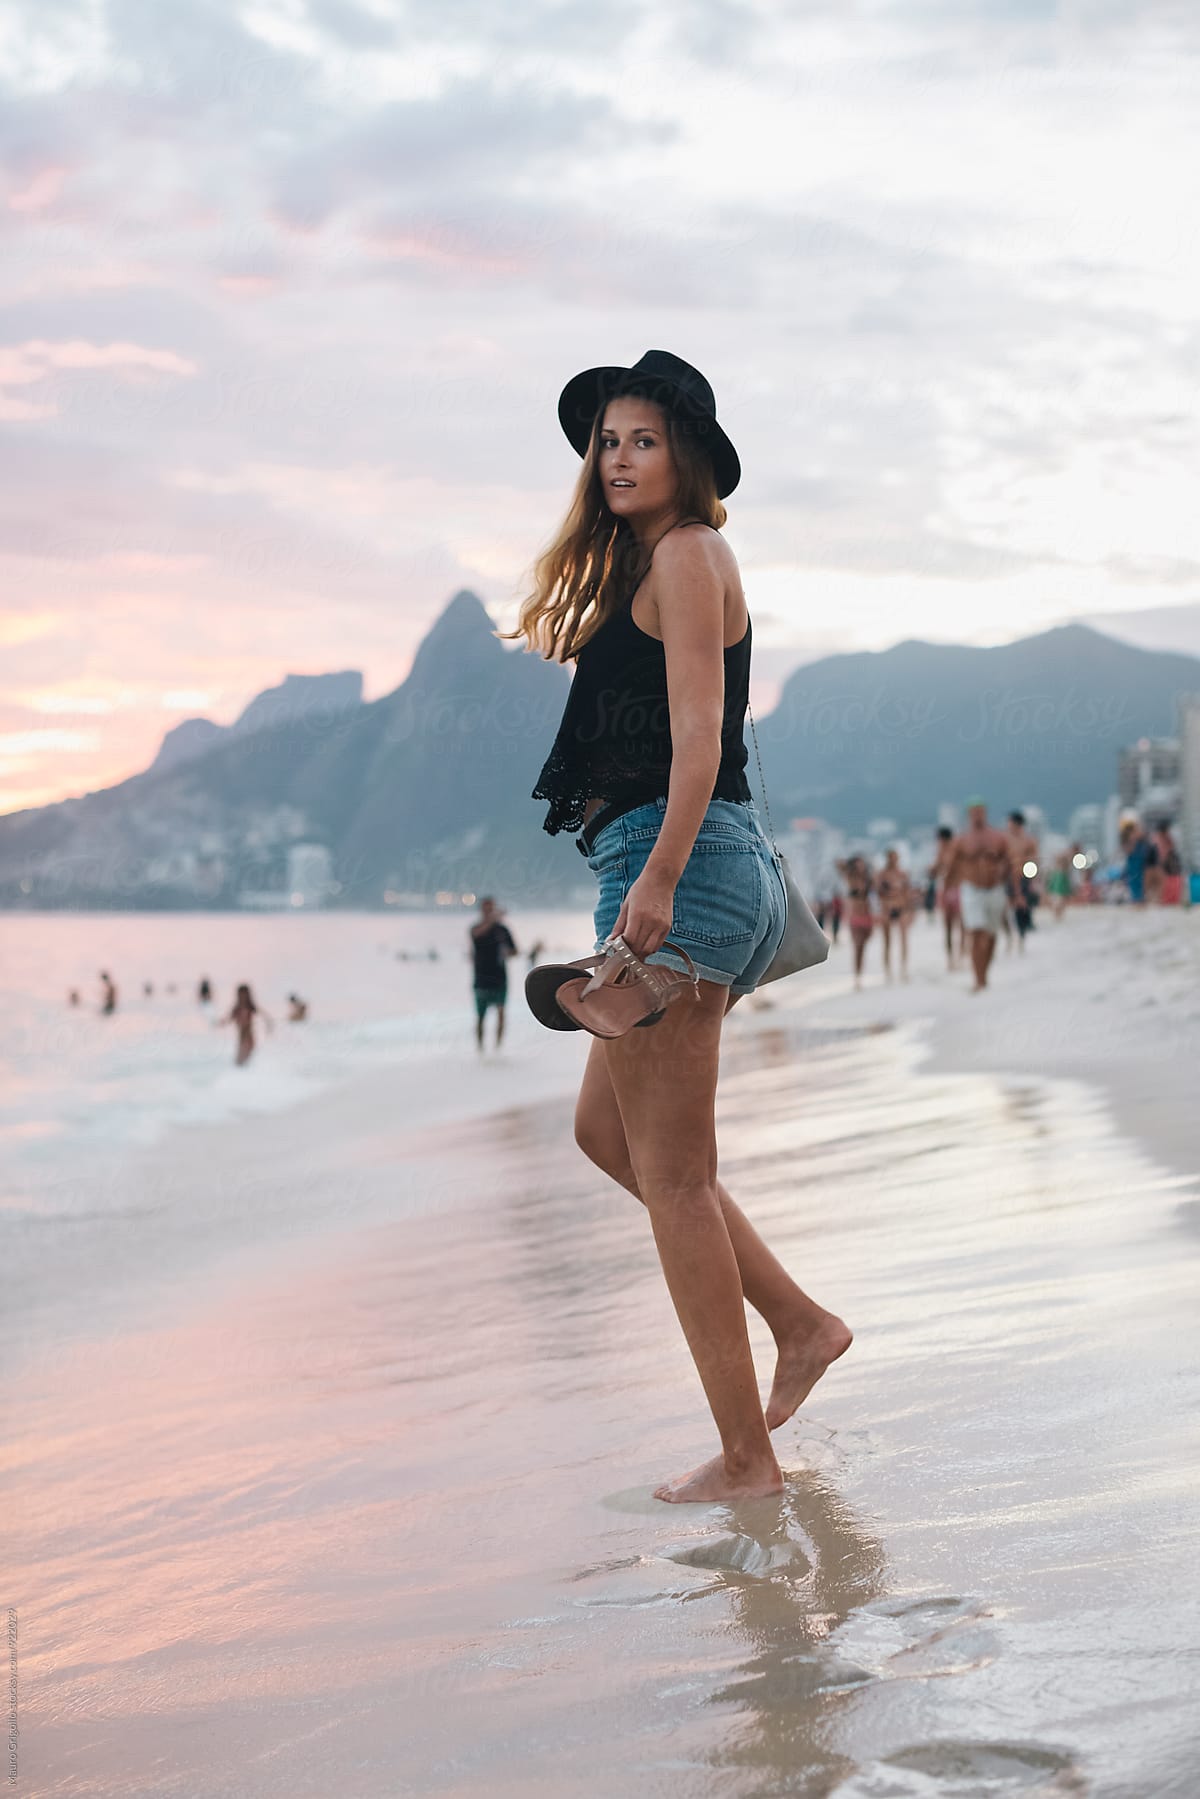 Rio De Janeiro Brazil Woman Walking On The Beach At Sunset By Mauro Grigollo Woman Brazil